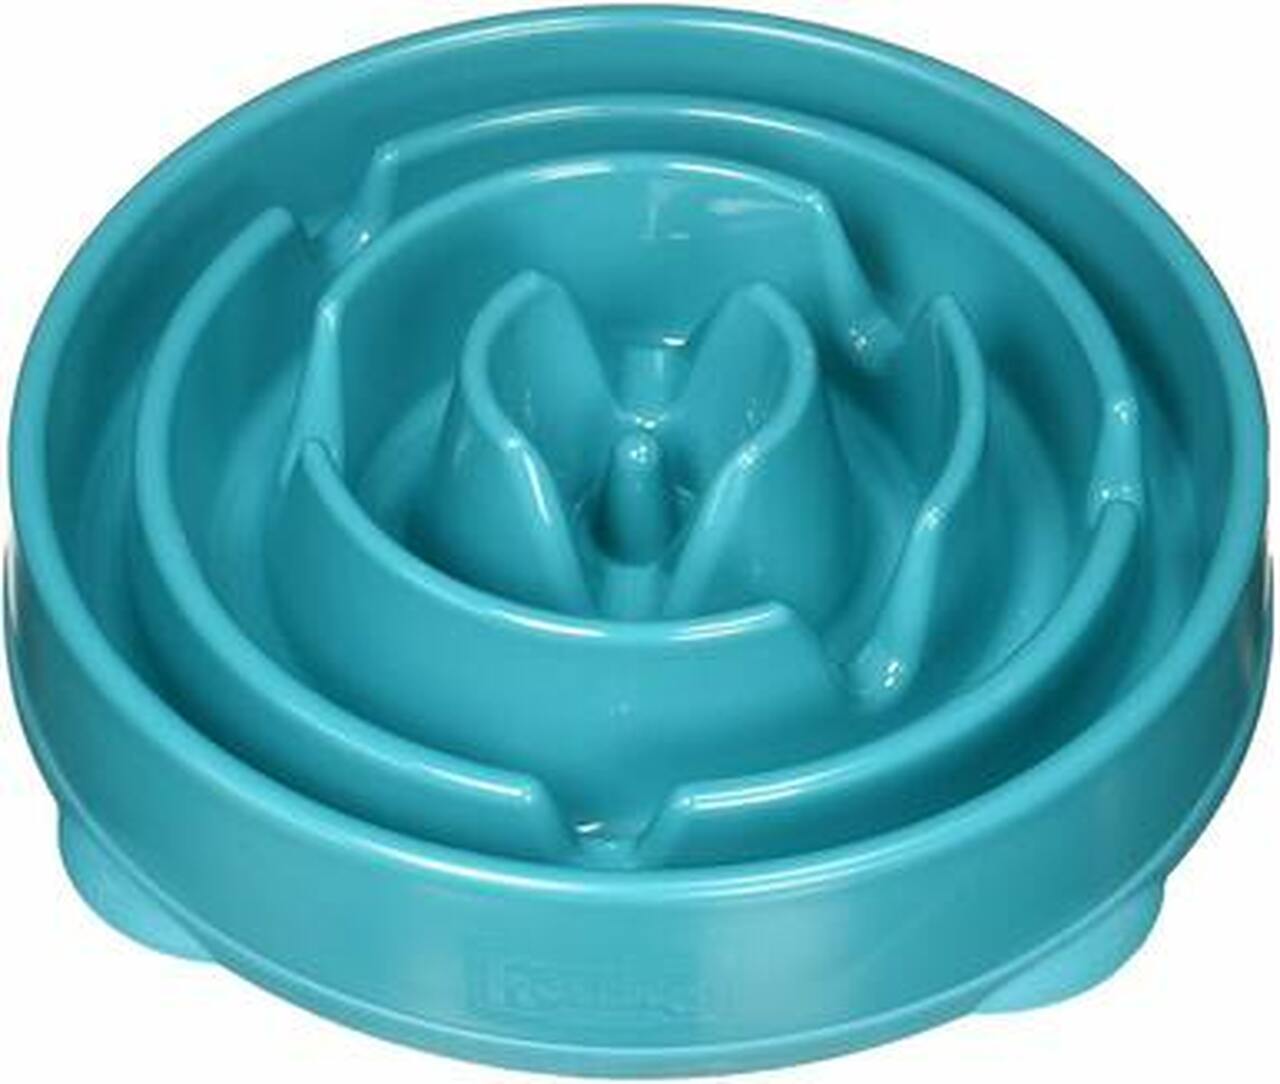 An teal round slow feeder dog bowl